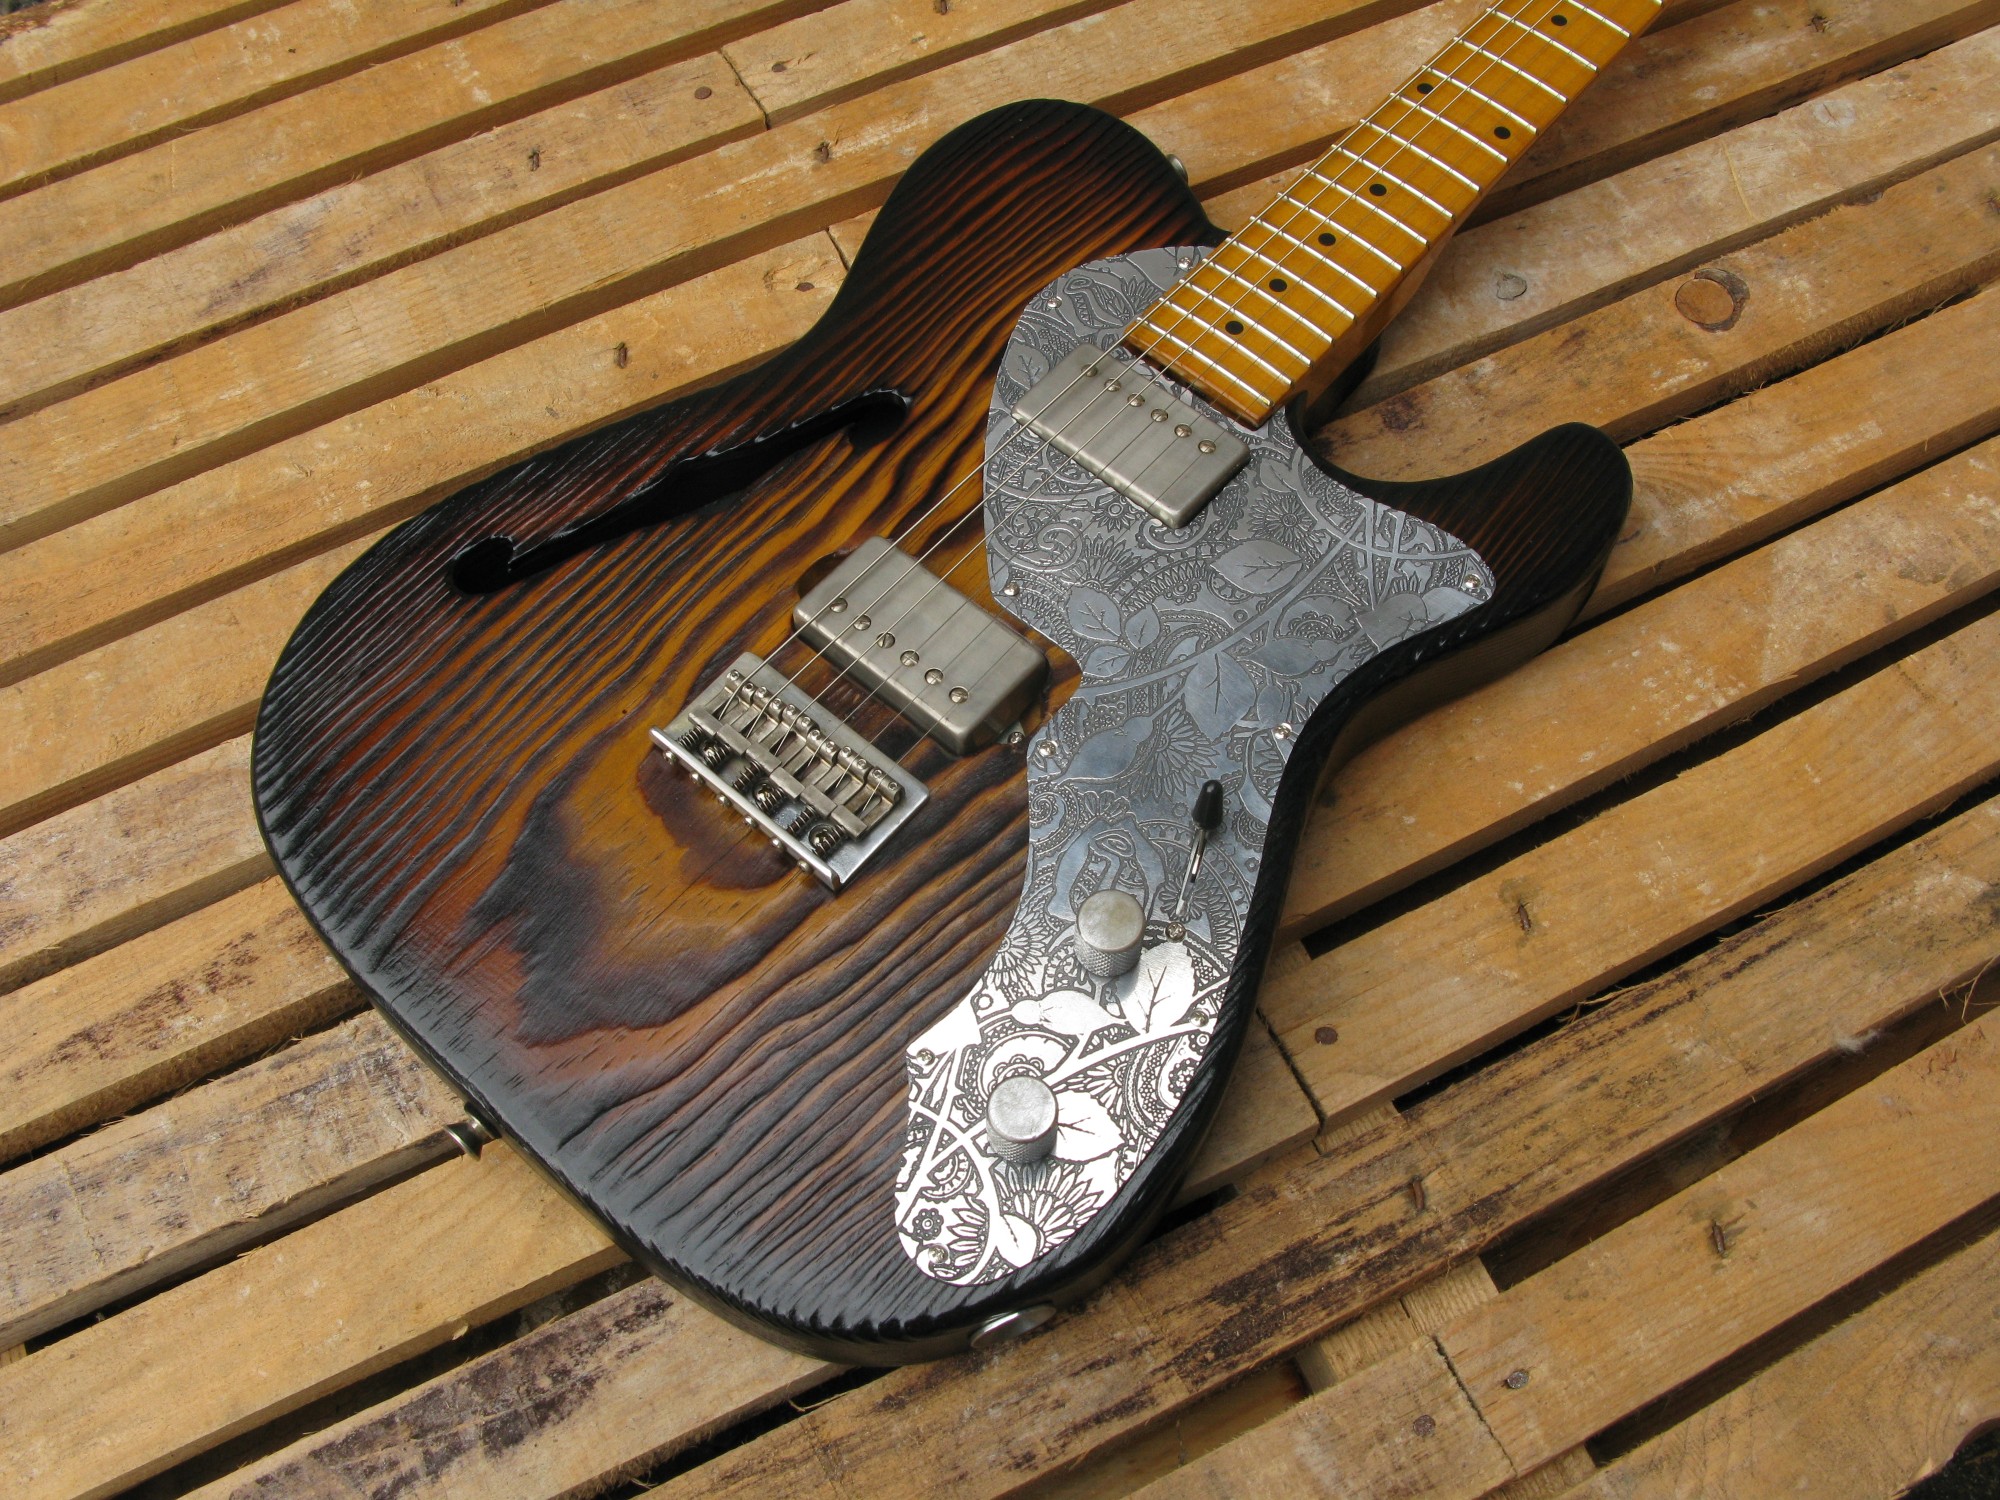 Body di una chitarra Telecaster Thinline in pino roasted con due PAF